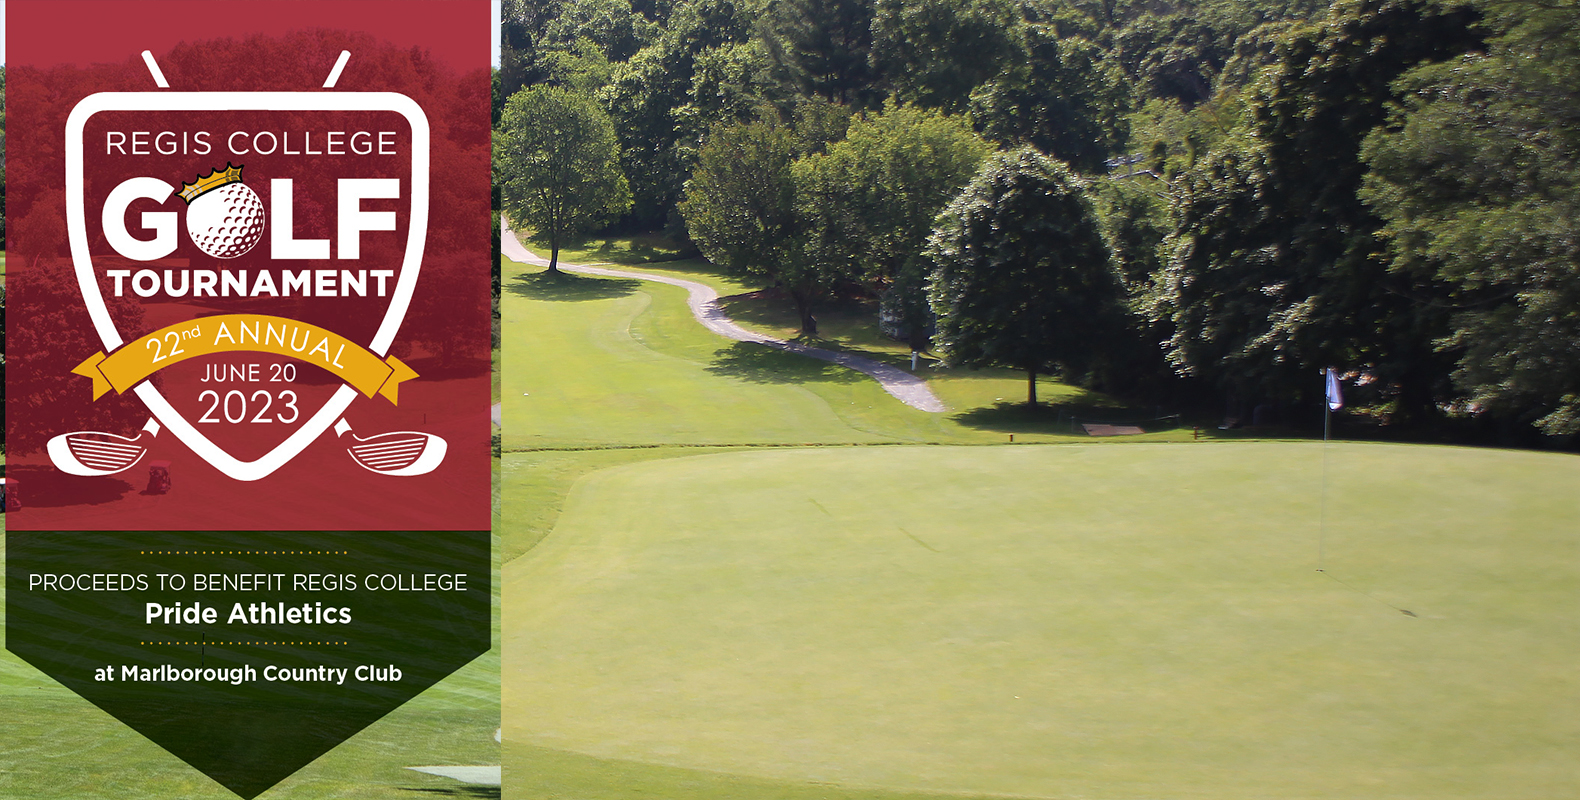 2023 Regis College Golf Tournament Set for June 20